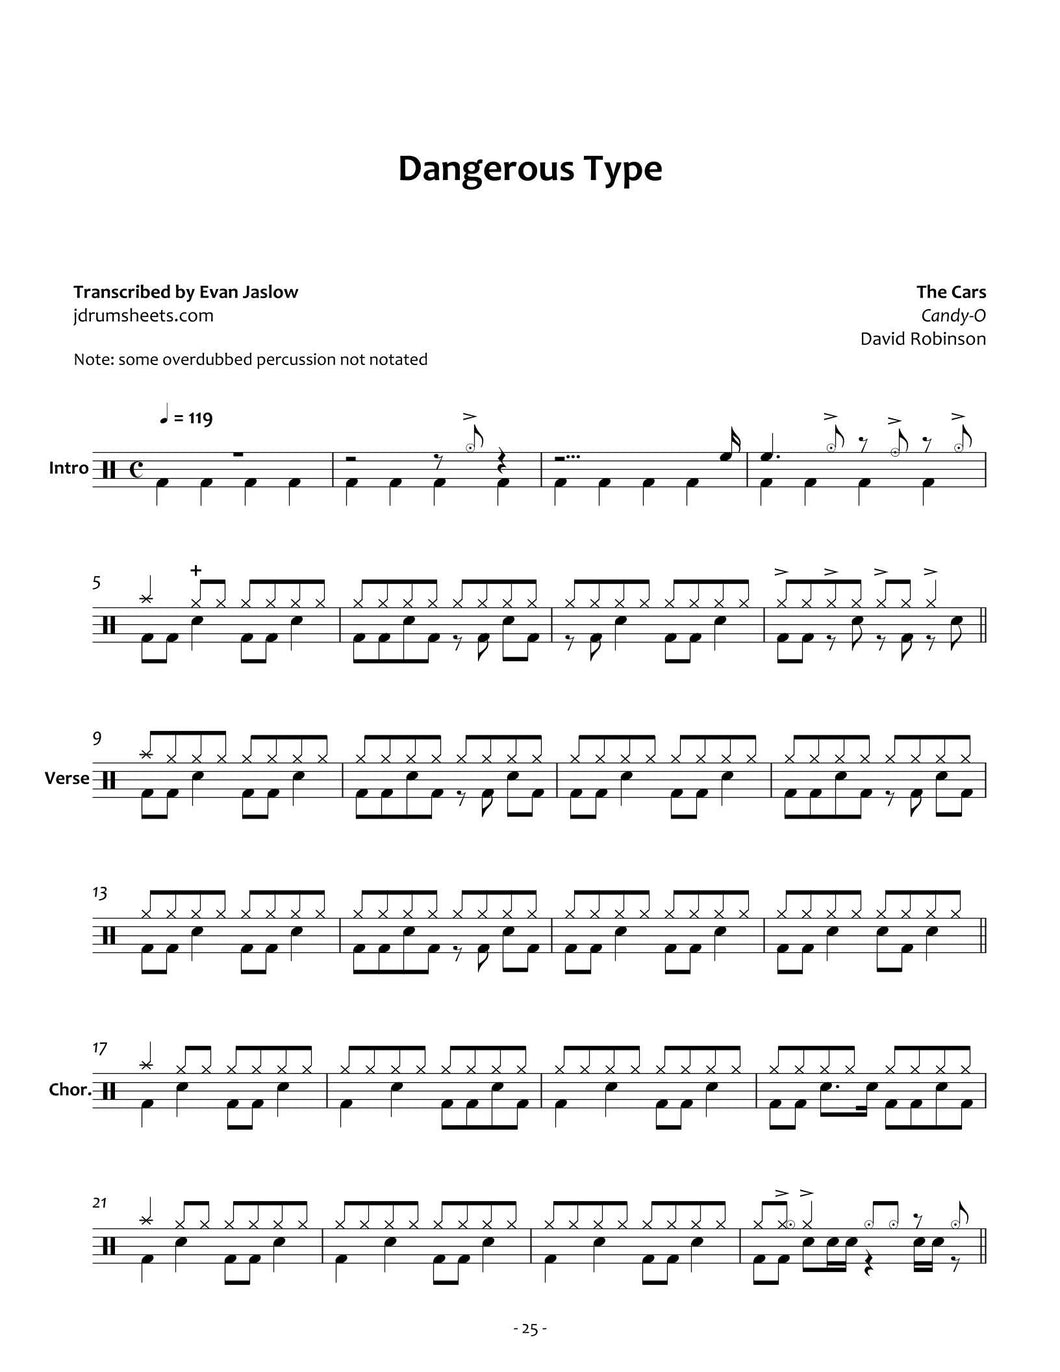 Dangerous Type - The Cars - Full Drum Transcription / Drum Sheet Music - Jaslow Drum Sheets